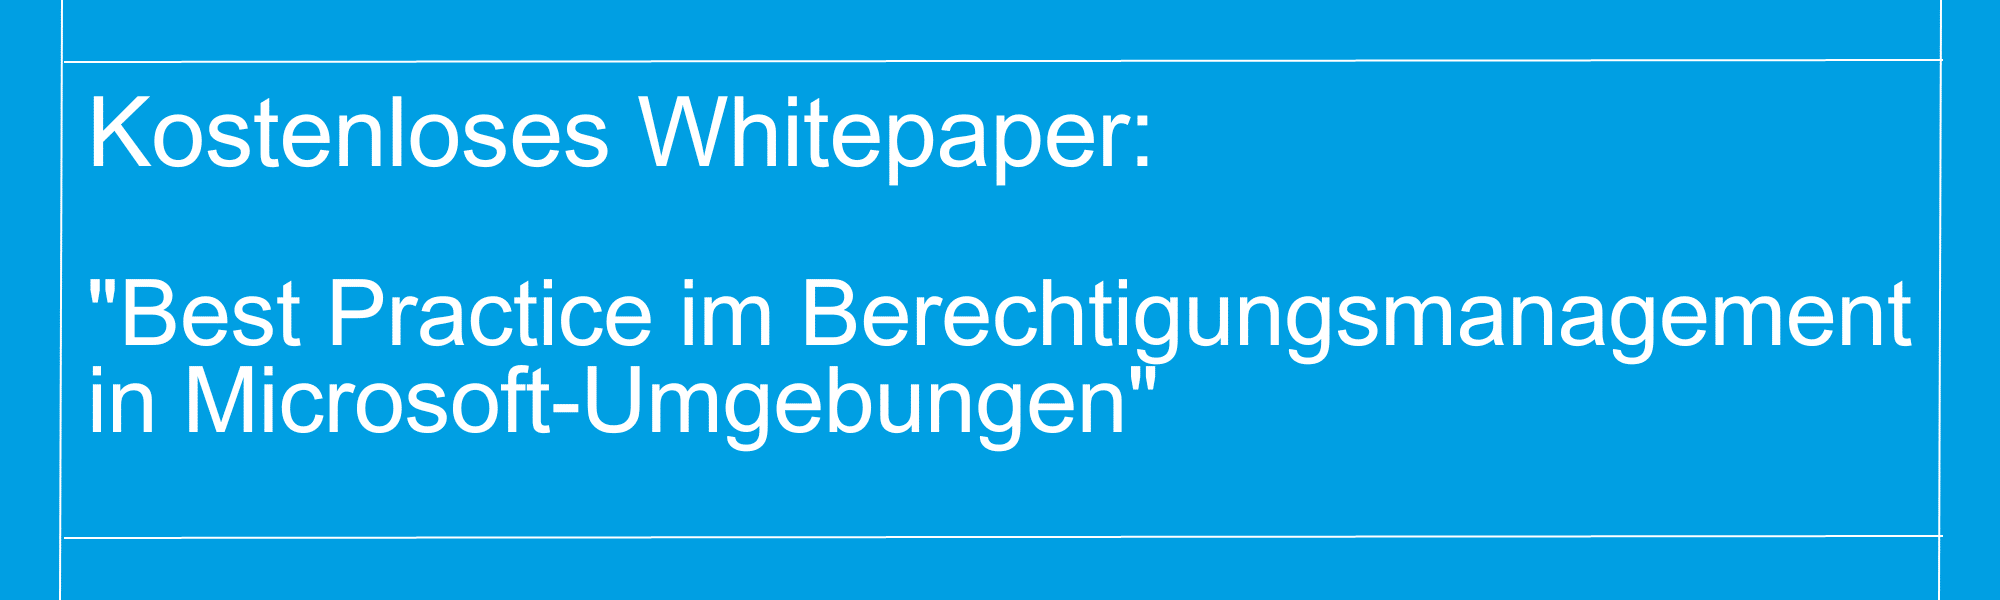 Banner: Whitepaper Download "Best Practice im Berechtigungsmanagement in Microsoft-Umgebung"